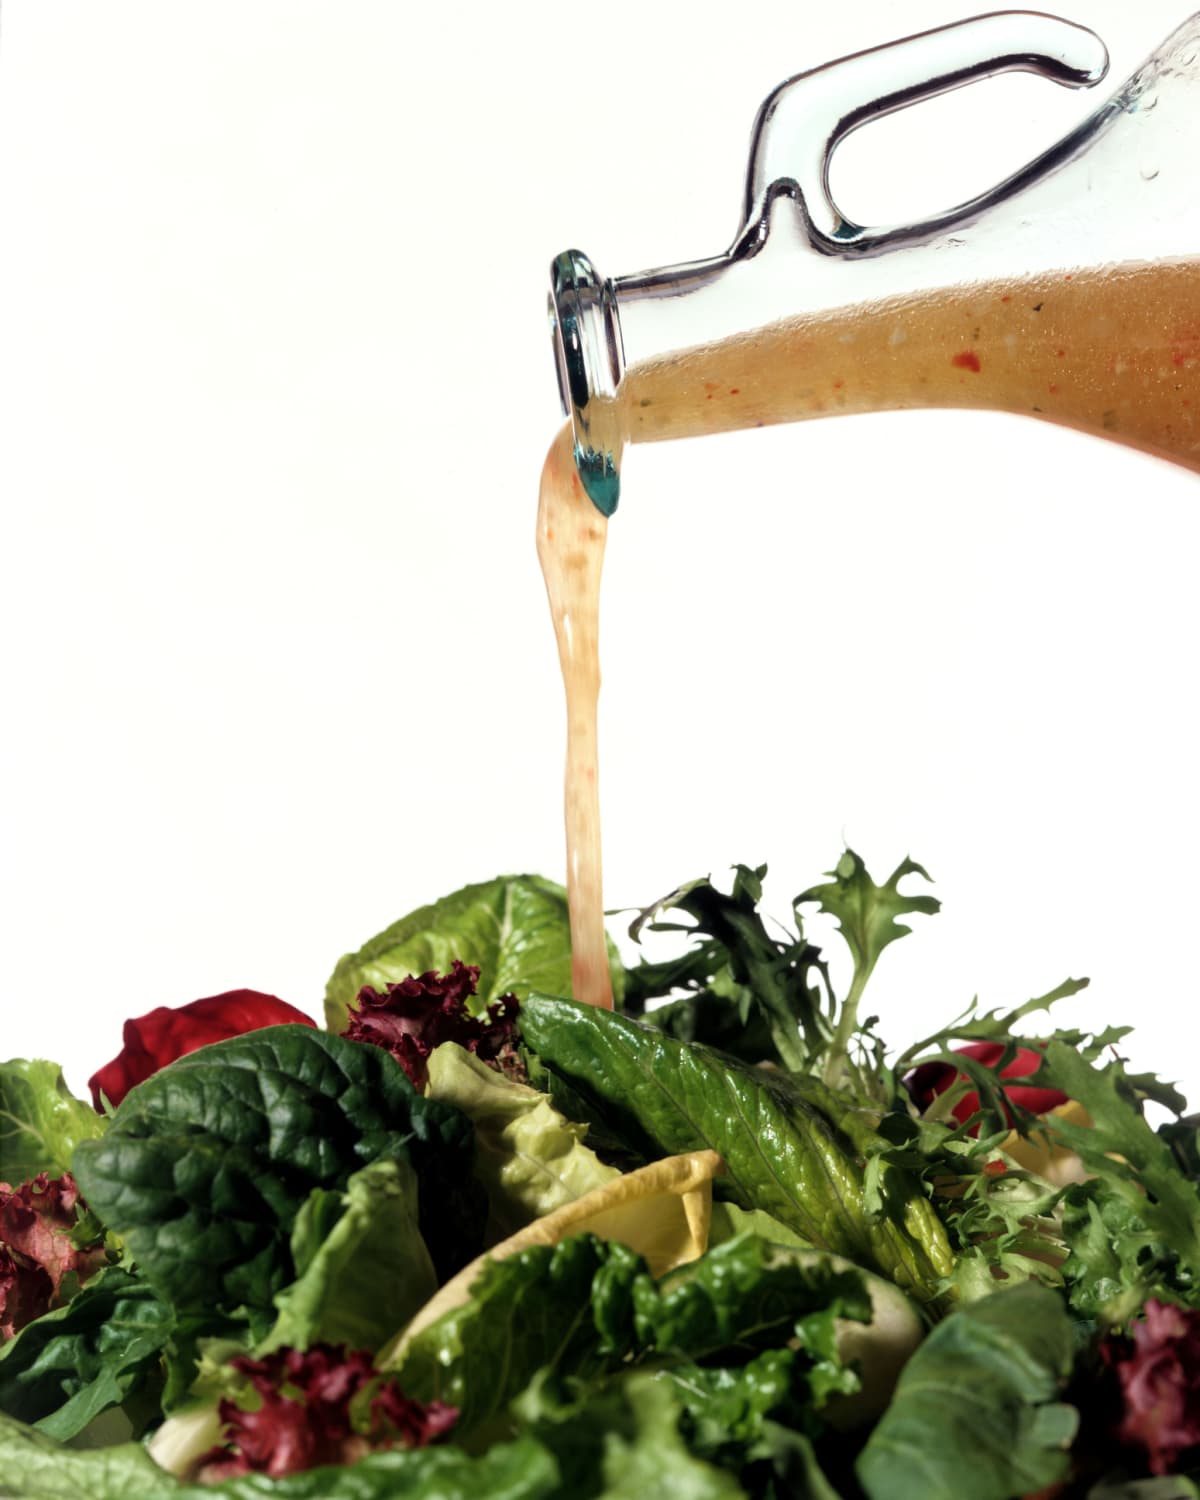 Salad green with vinaigrette dressing